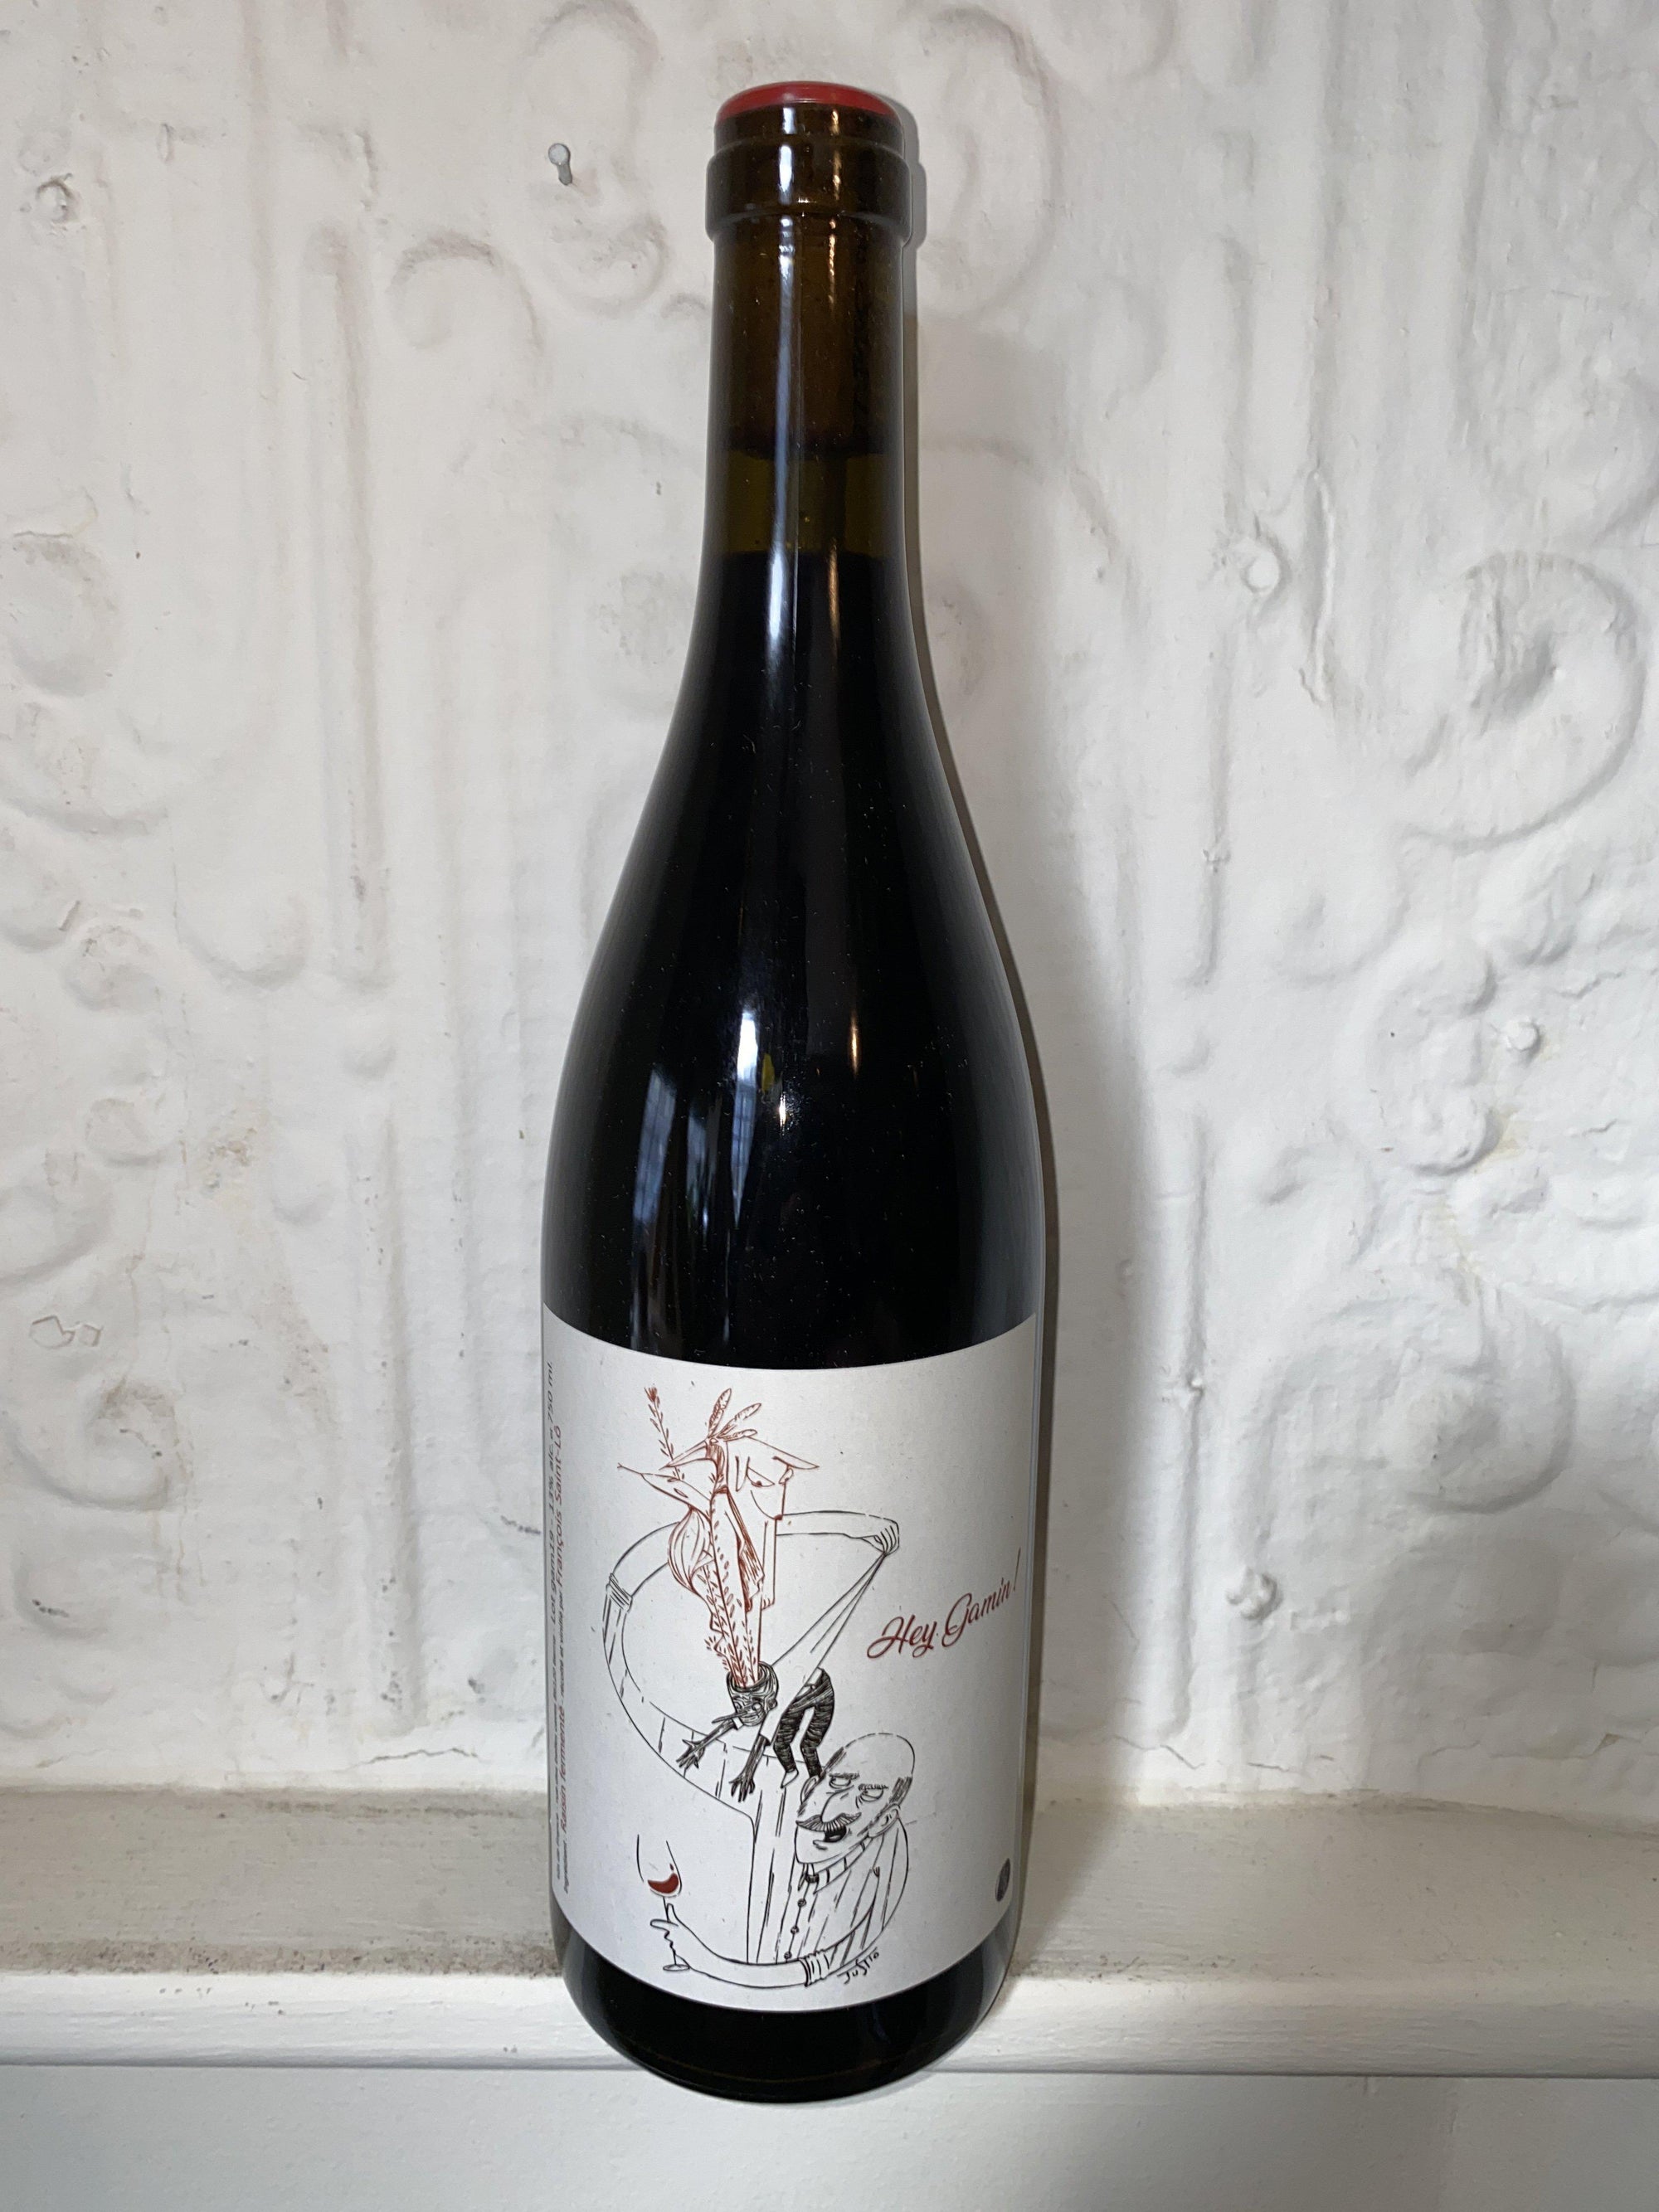 Merlot Red Wine from Pelee Island Winery